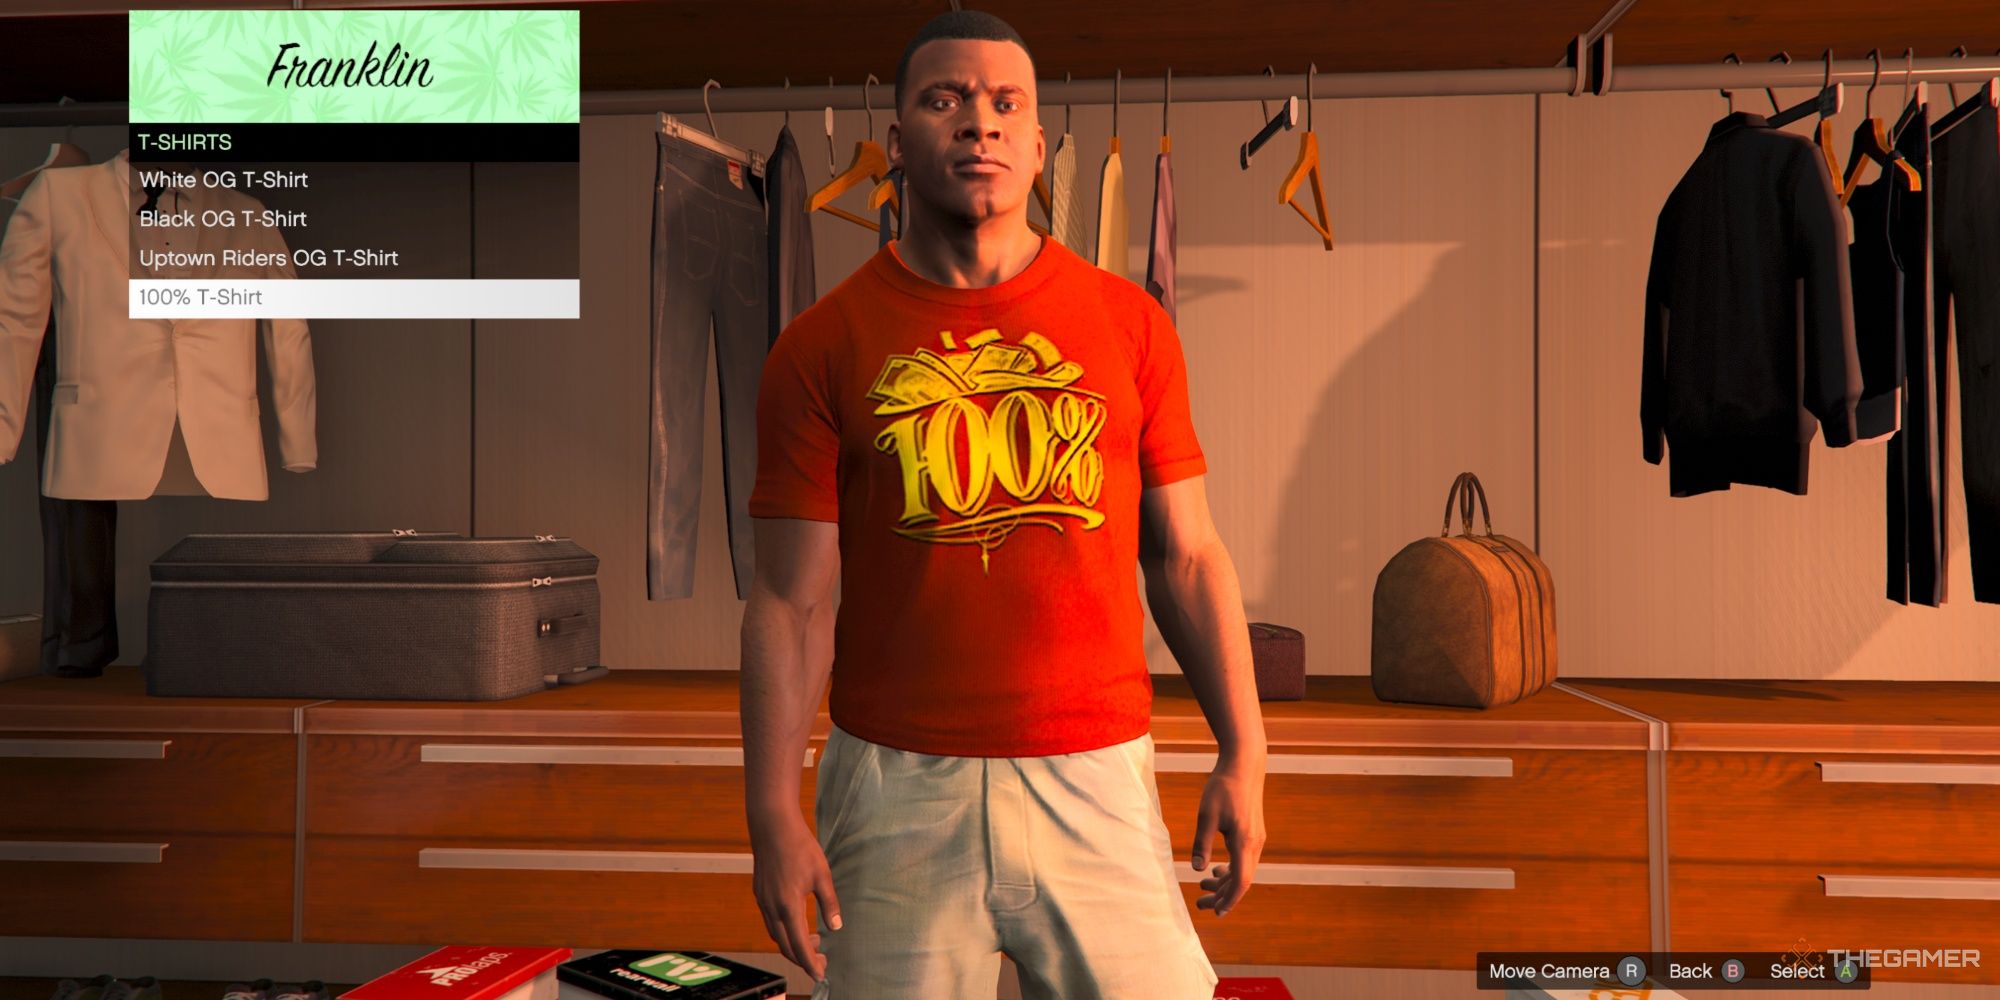 The 100 percent T-Shirt present in GTA5